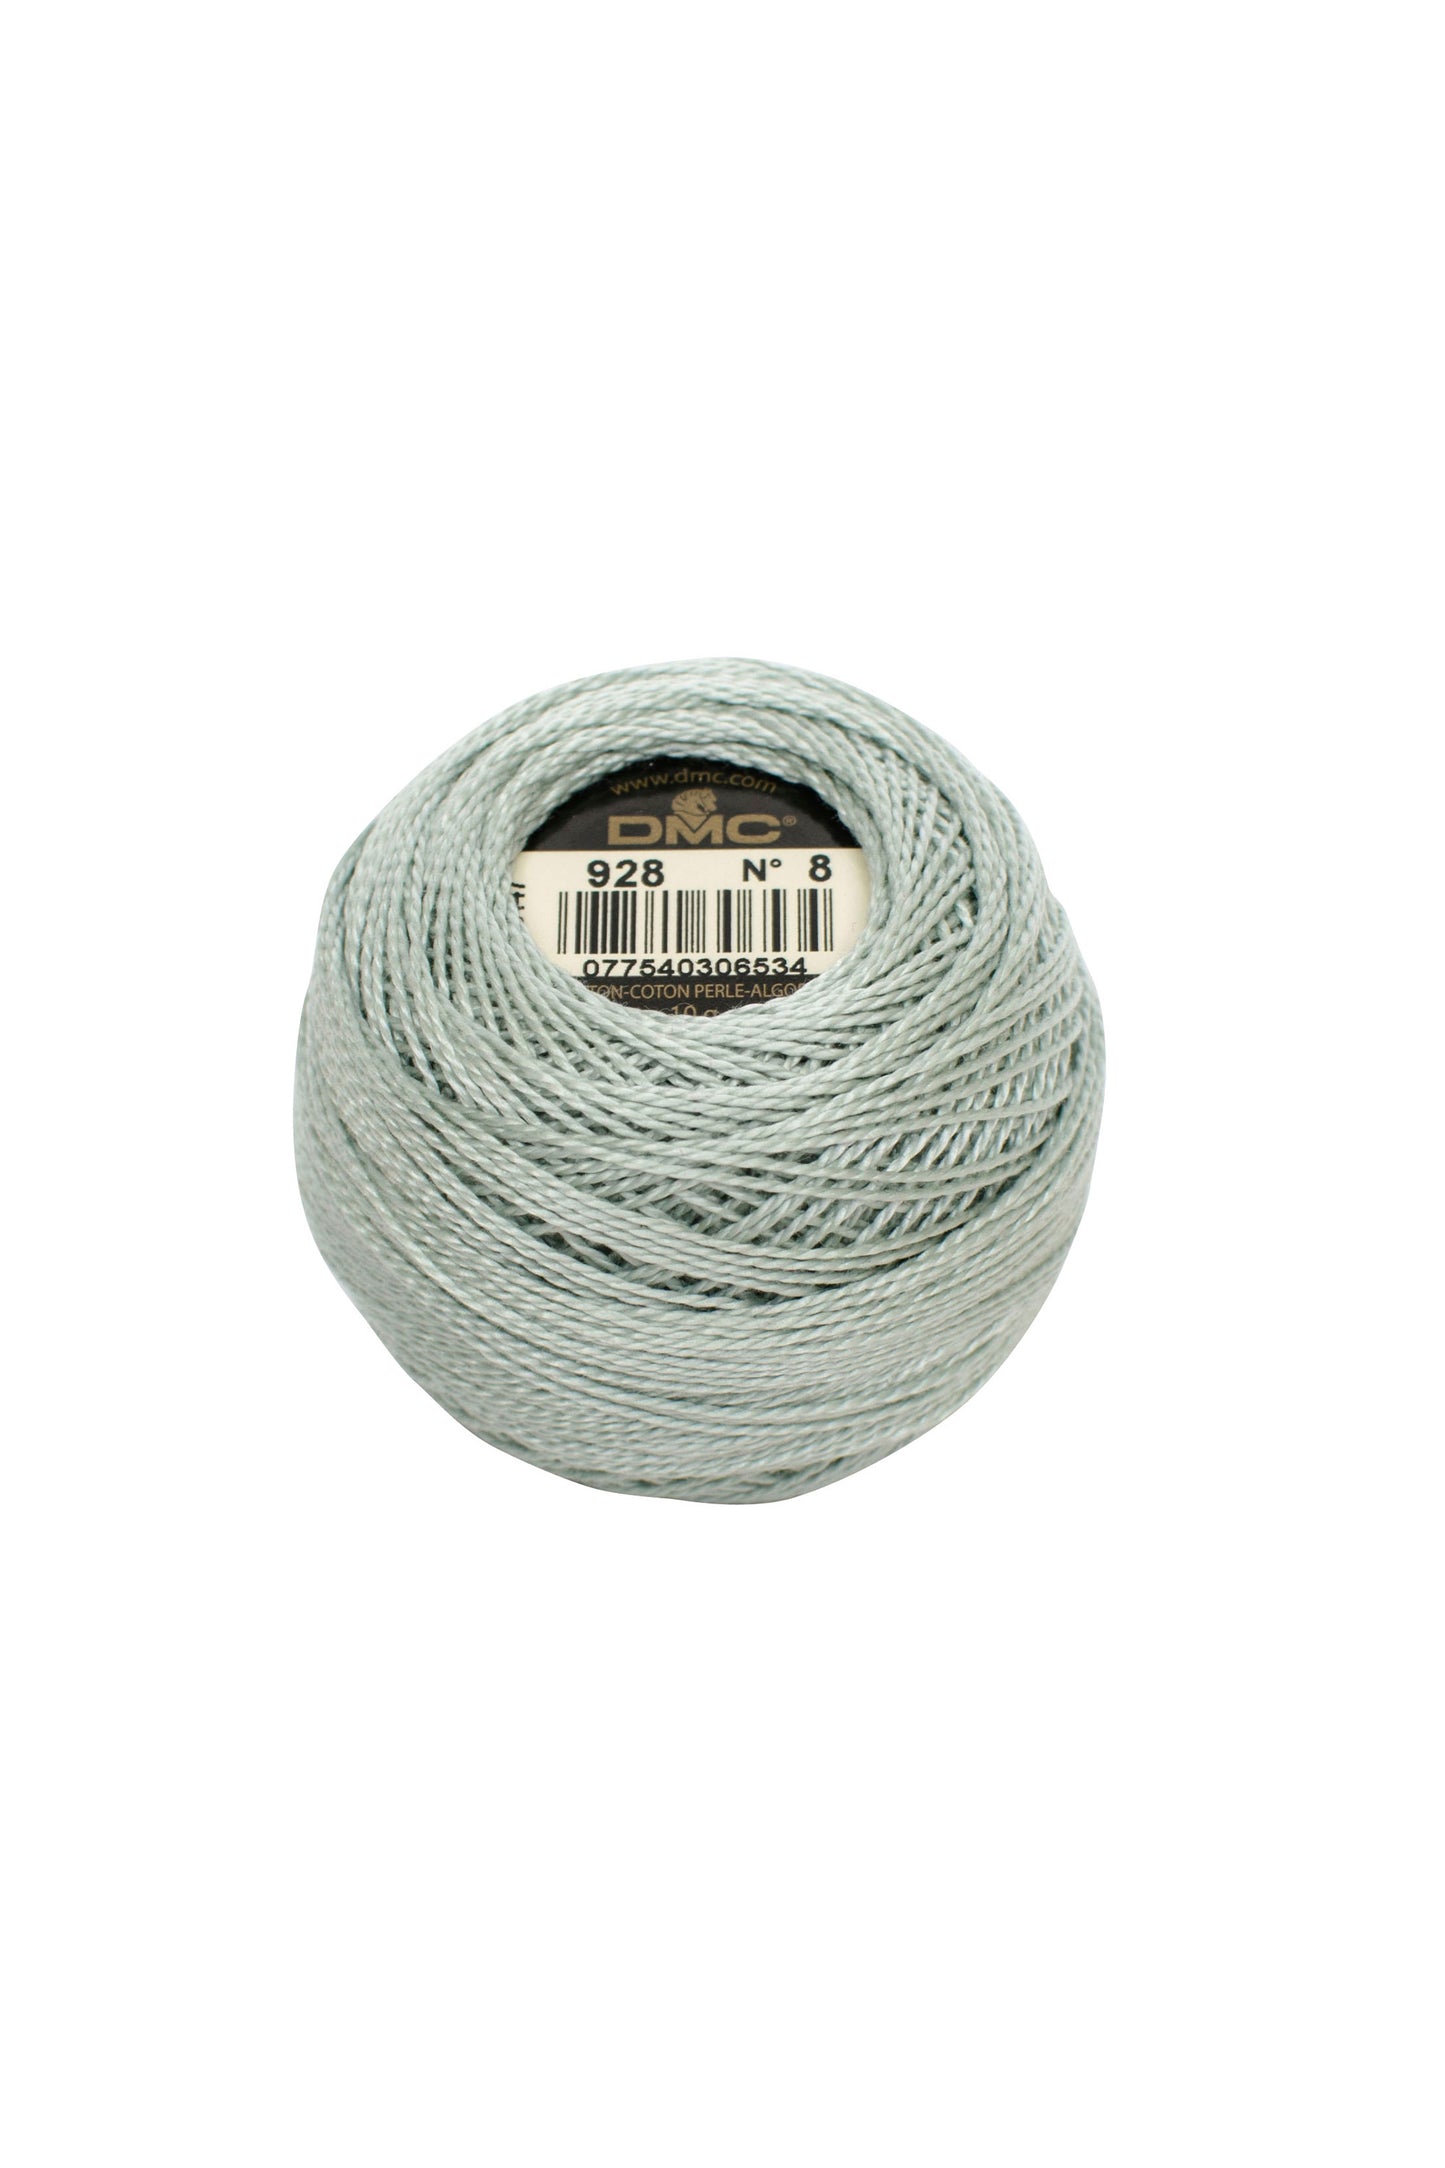 928 Very Light Grey Green - DMC #8 Perle Cotton Ball